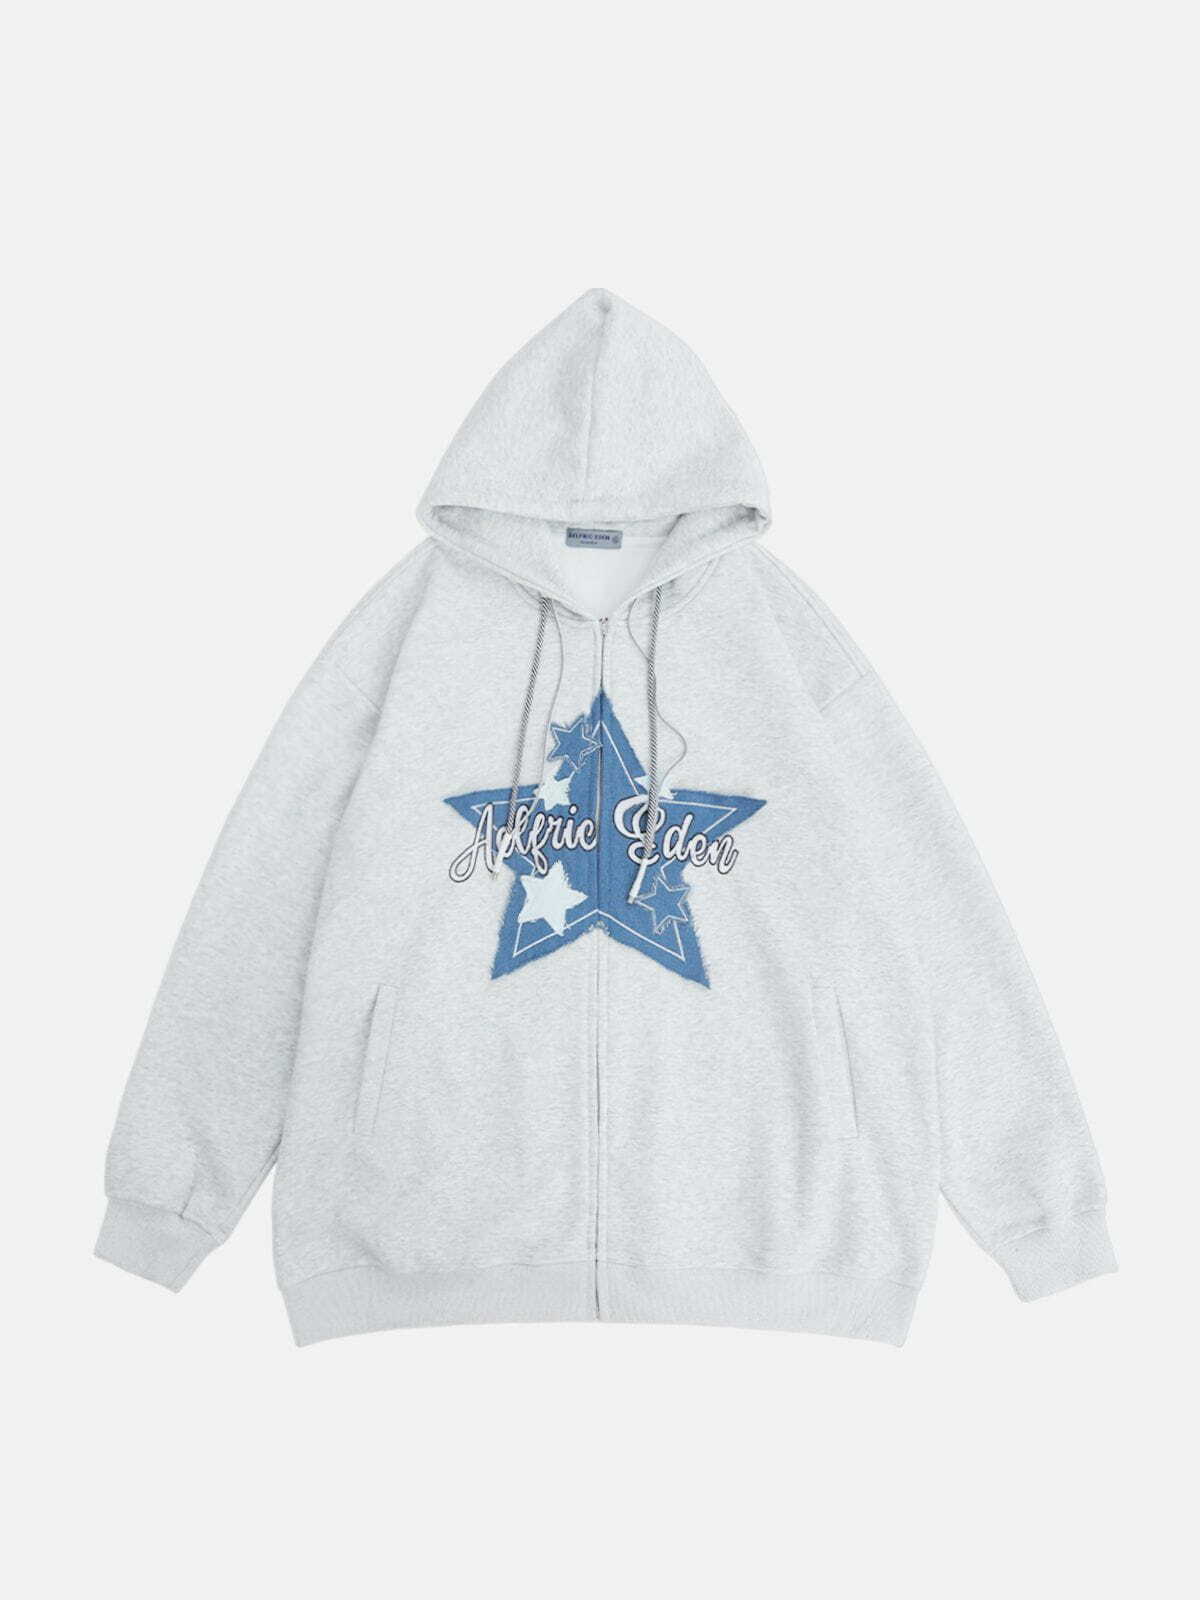 revolutionary broken star hoodie edgy streetwear 4047